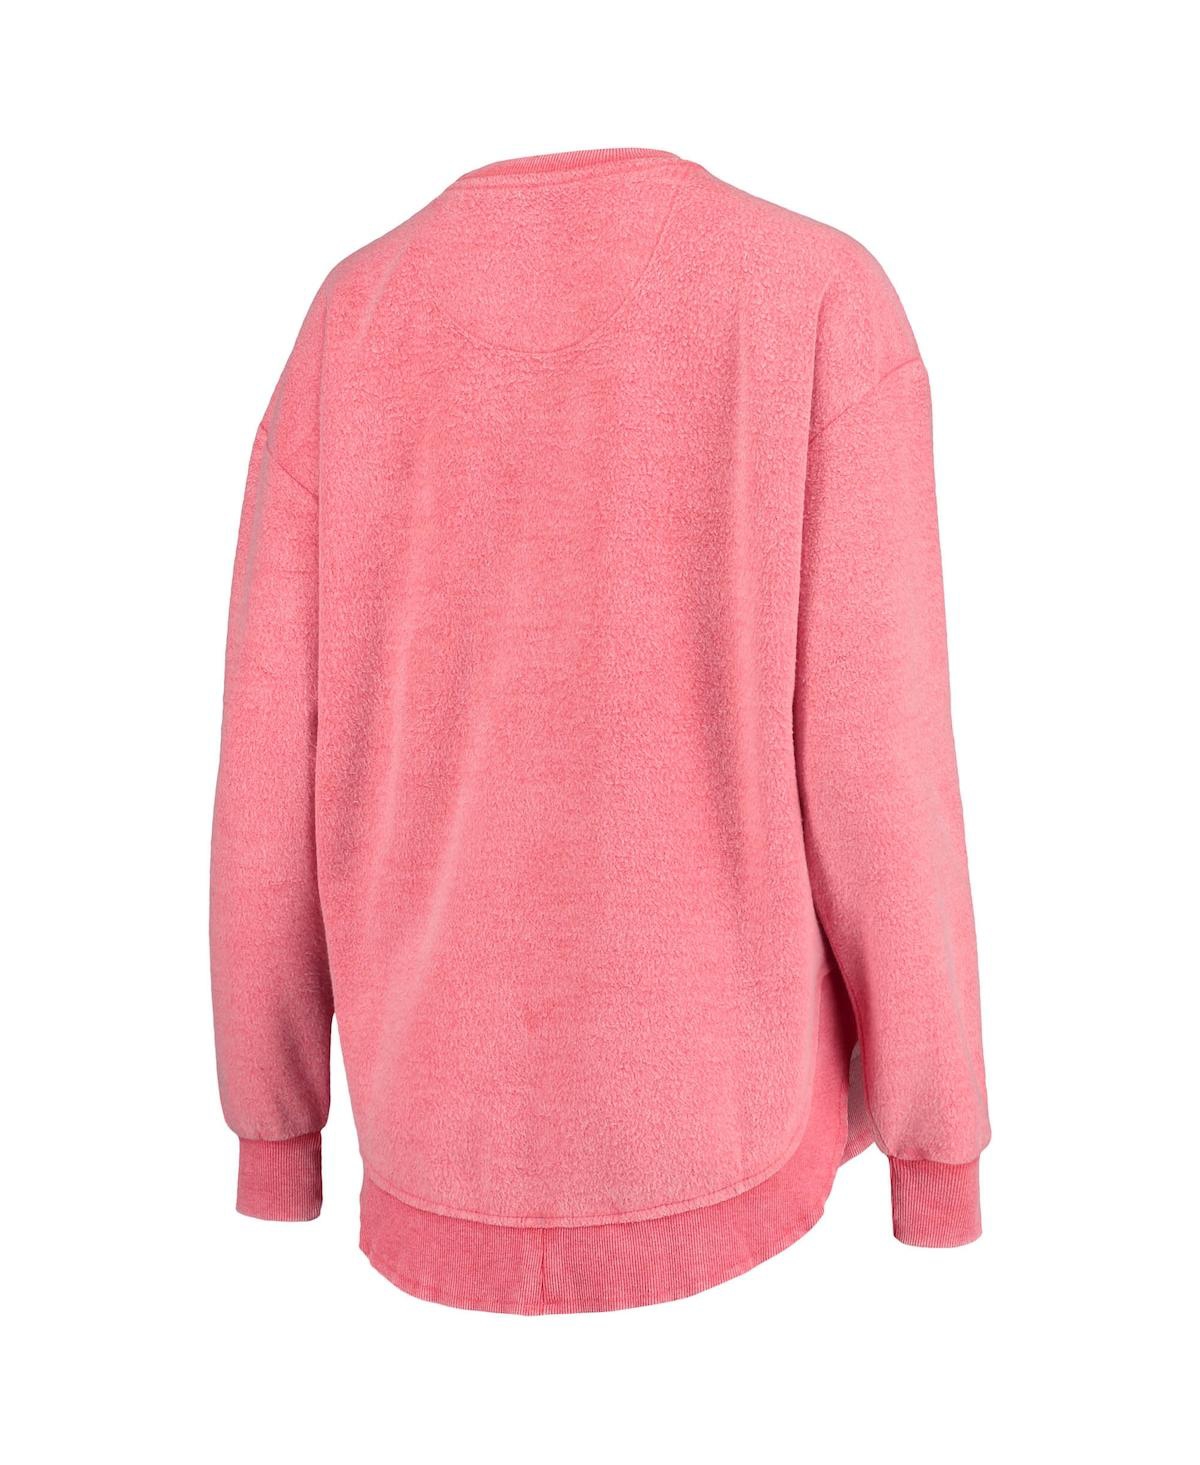 Shop Pressbox Women's  Scarlet Distressed Nebraska Huskers Ponchoville Pullover Sweatshirt